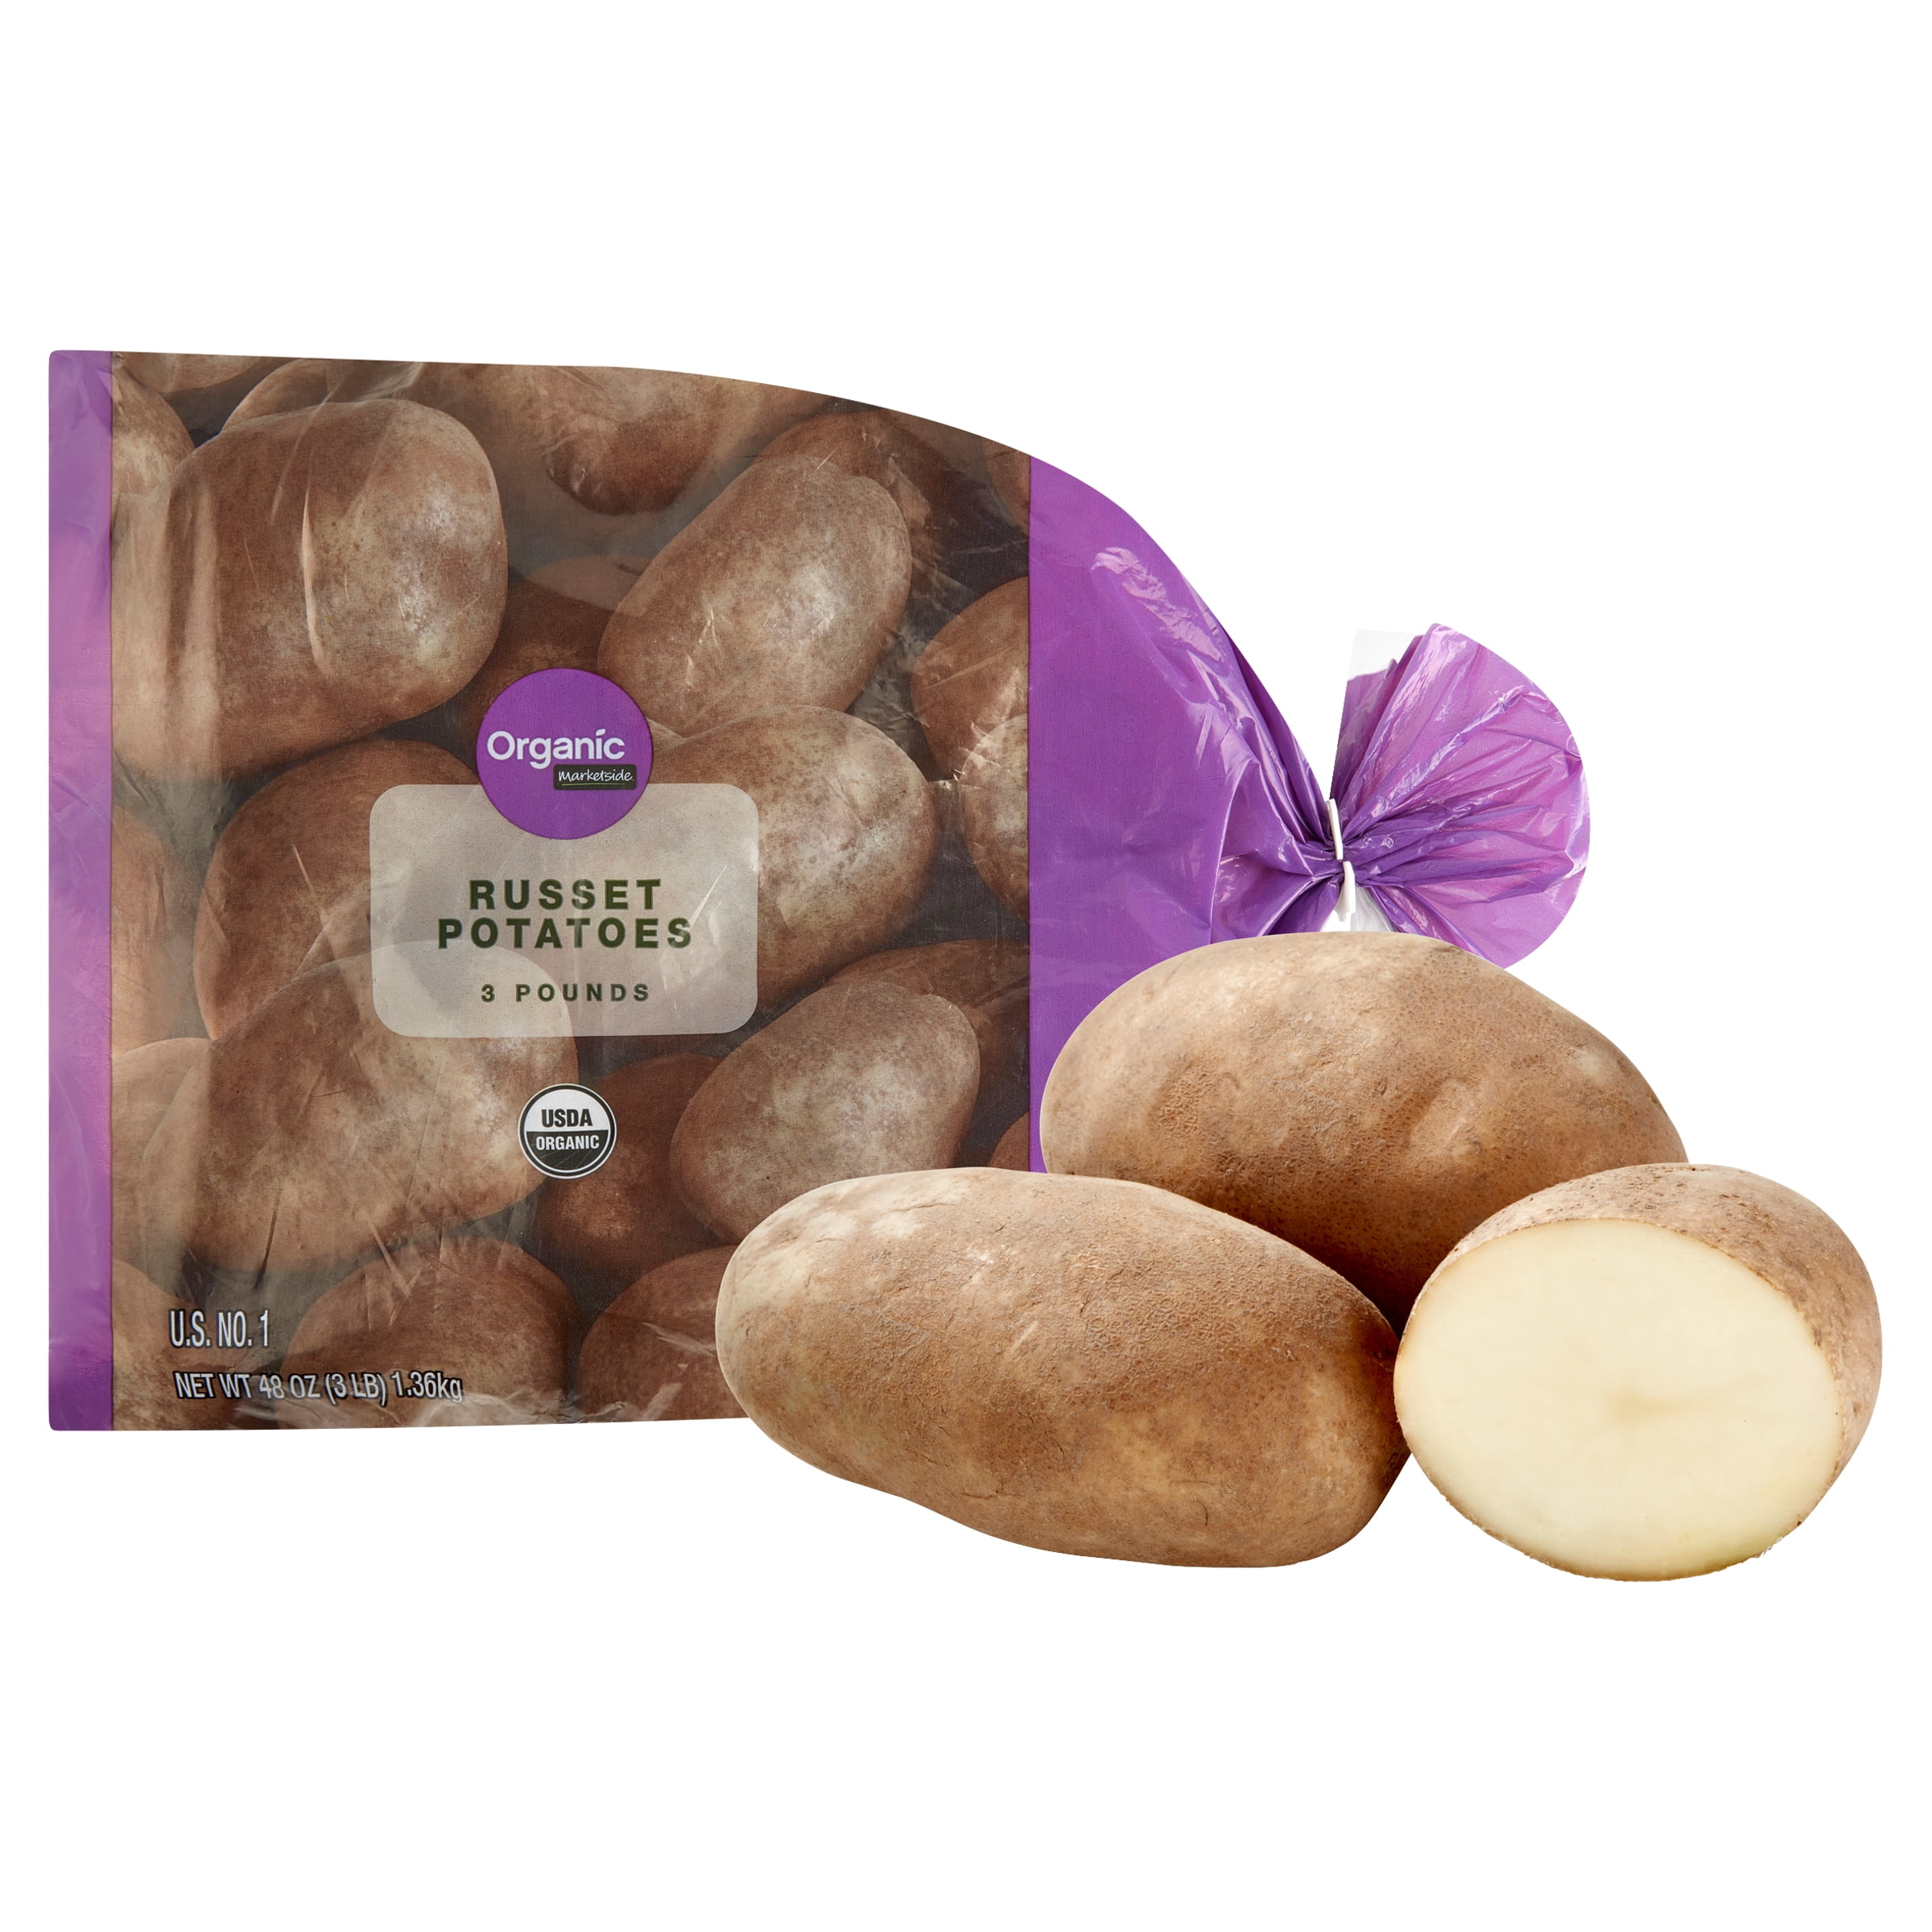 Organic Red Potatoes – Boxed Greens